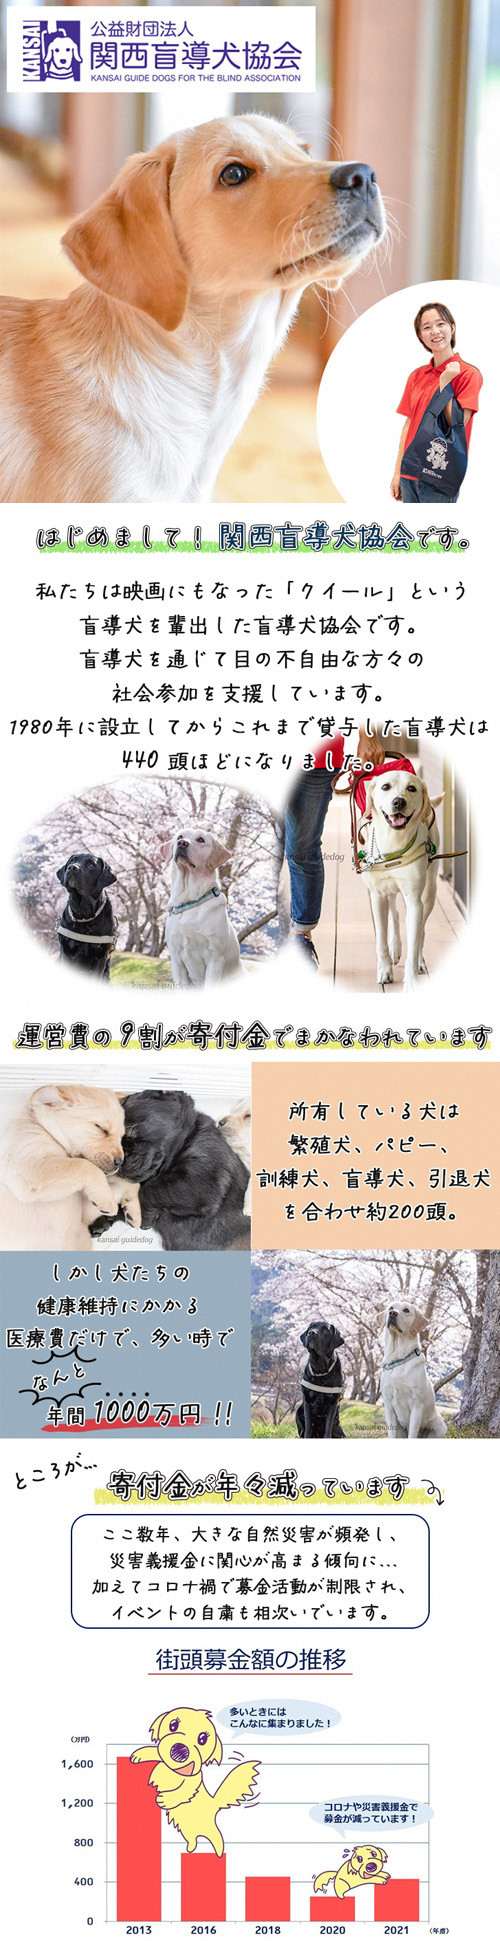 chetumaxsales.com - ふるさと納税 亀岡市 盲導犬訓練 支援寄付[盲導犬